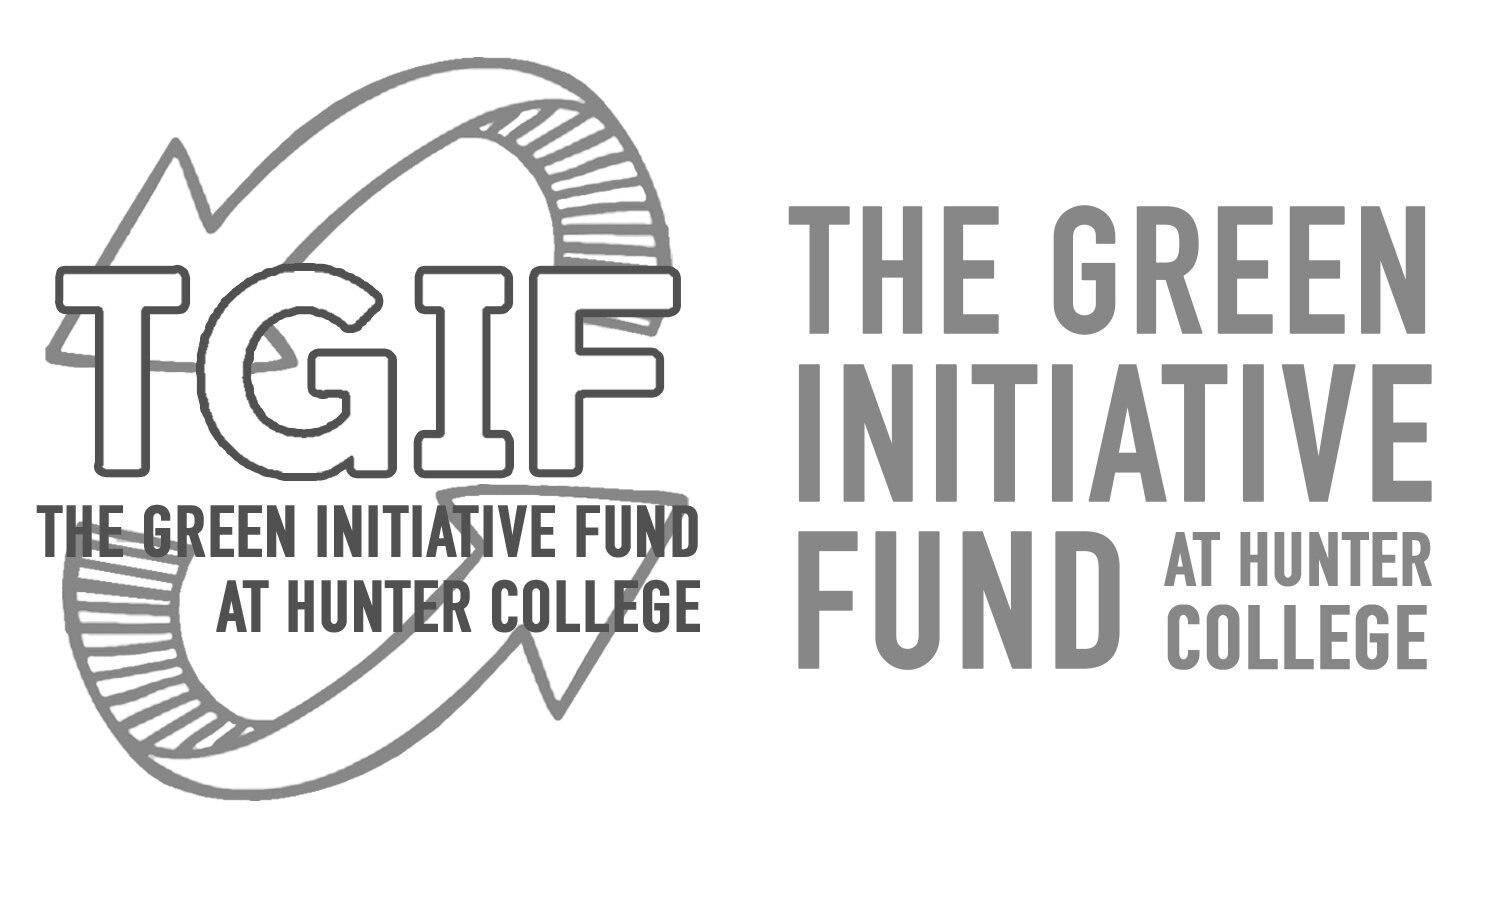 The Green Initiative Fund at Hunter College